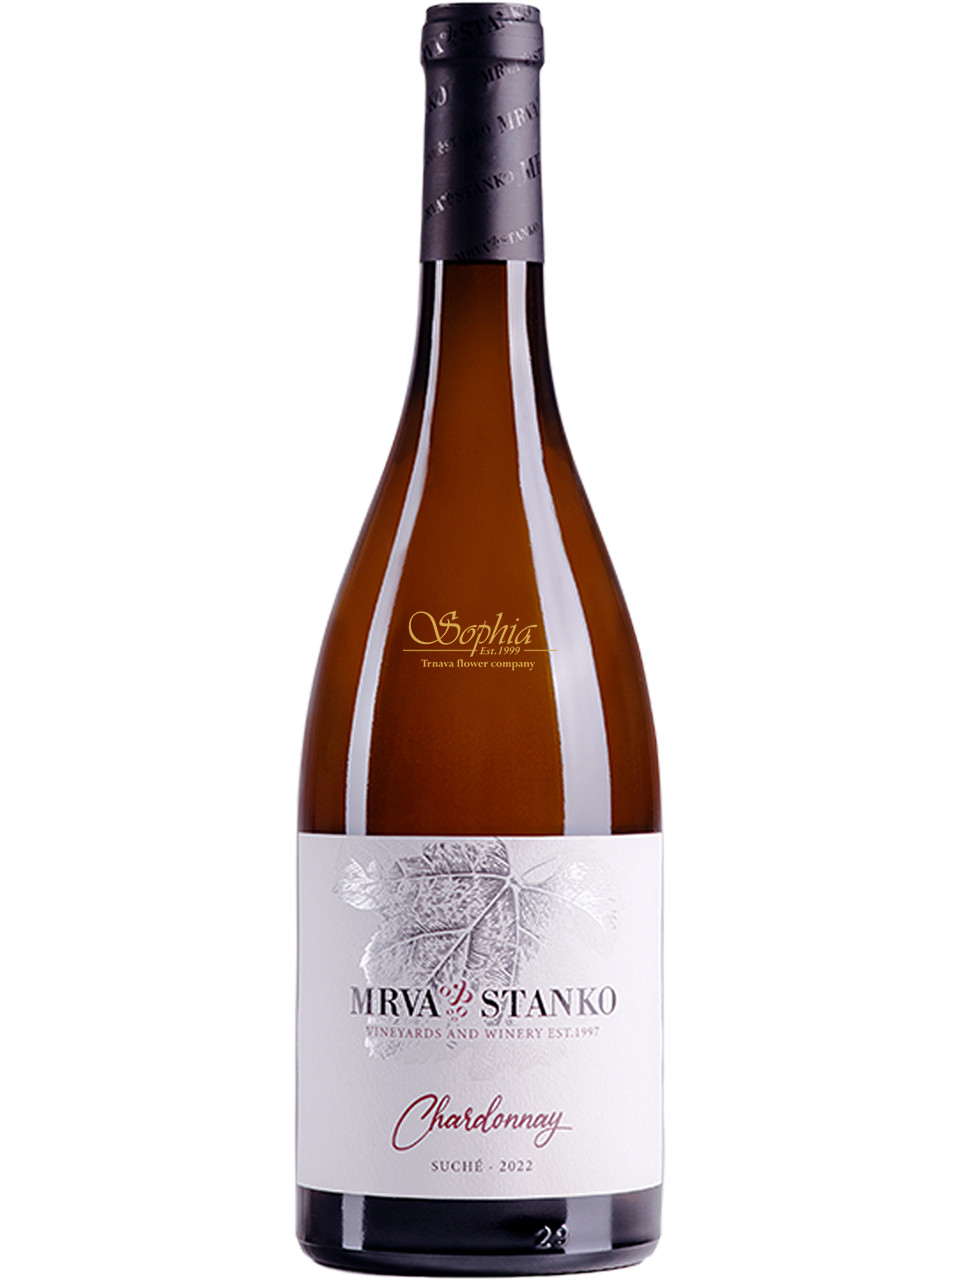 MRVA & STANKO - Chardonnay (NVO) 2022